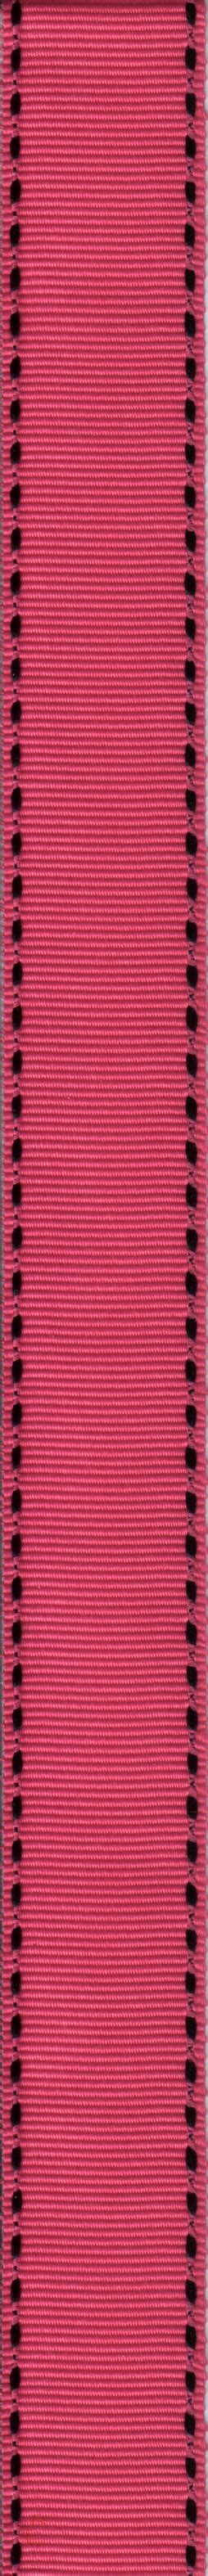 Pink Ribbon By Visualjunky On Deviantart